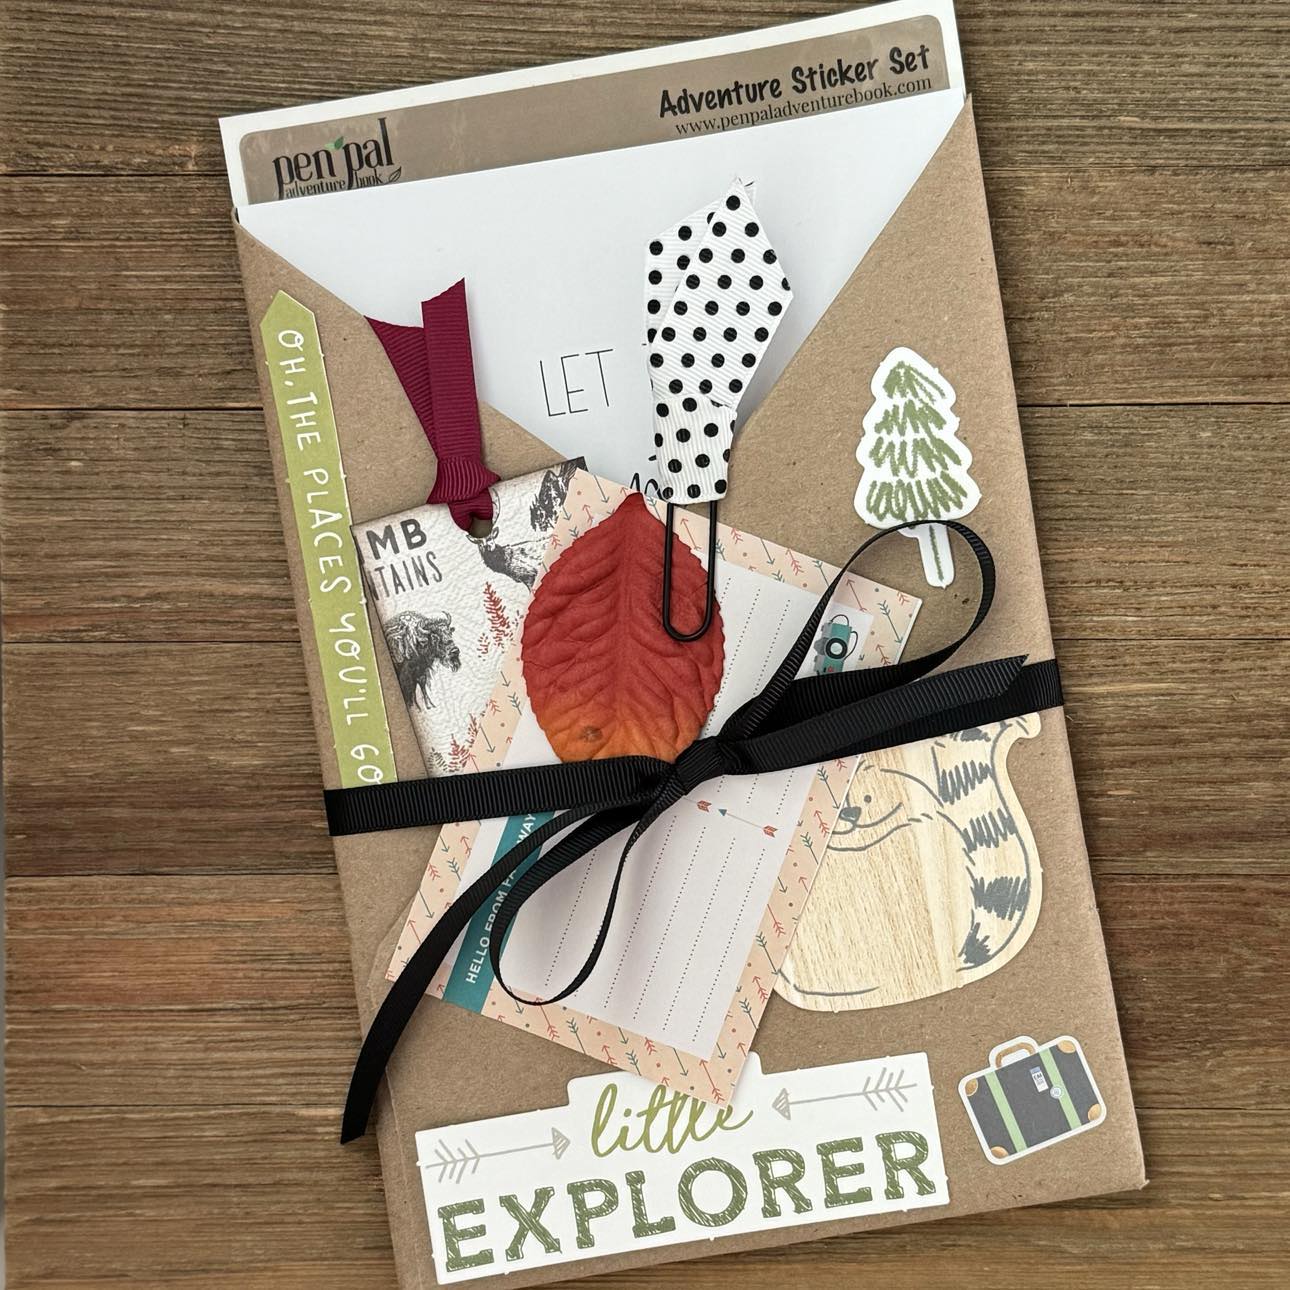 Little Explorer Gift Set with Pen Pal Adventure Journal & Adventure Hiking Sticker Set